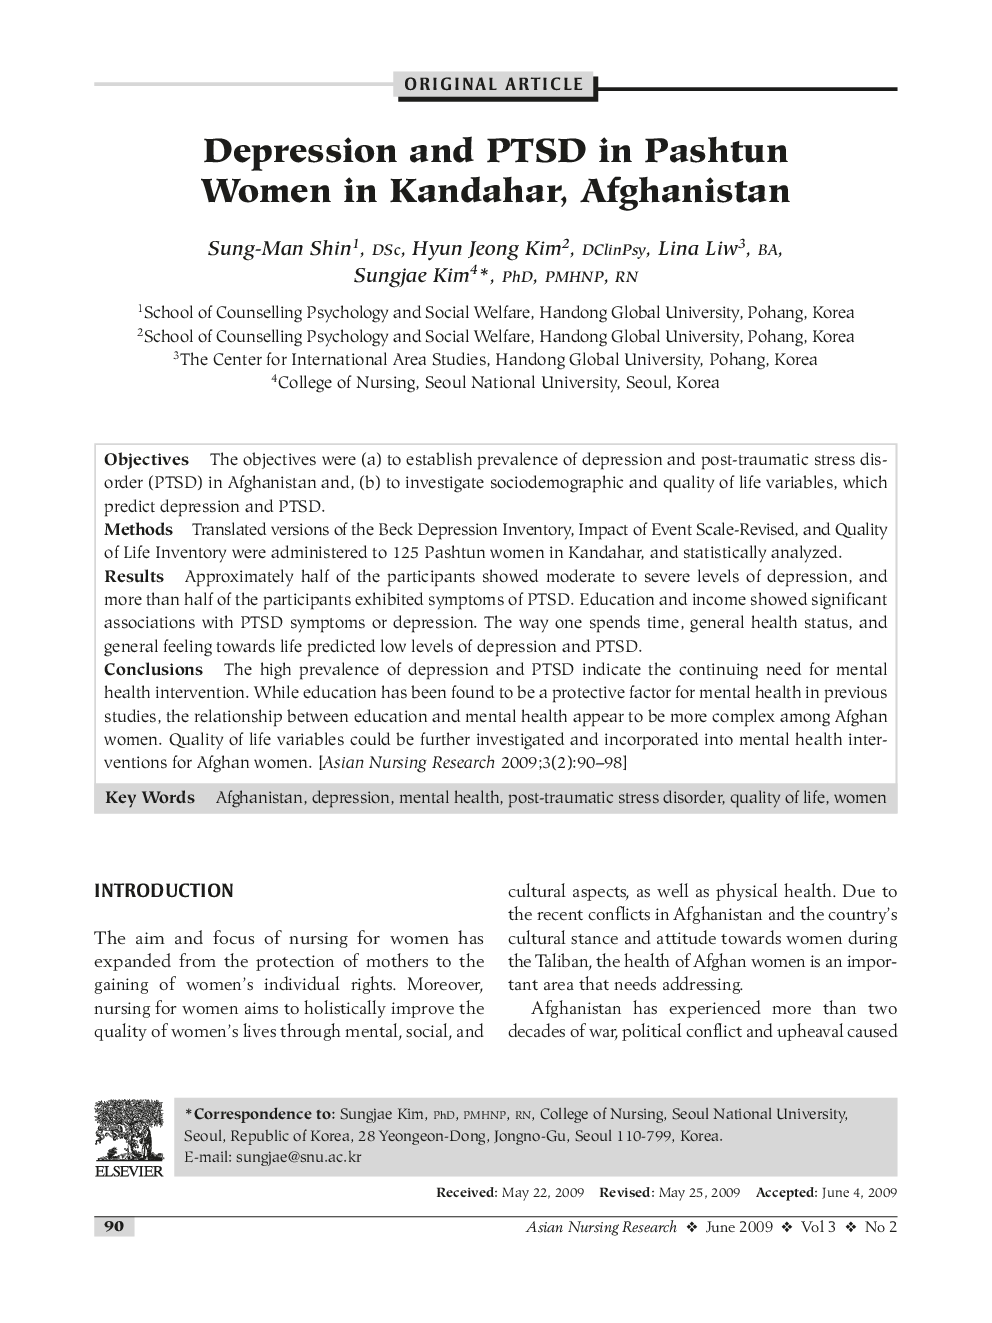 Depression and PTSD in Pashtun Women in Kandahar, Afghanistan